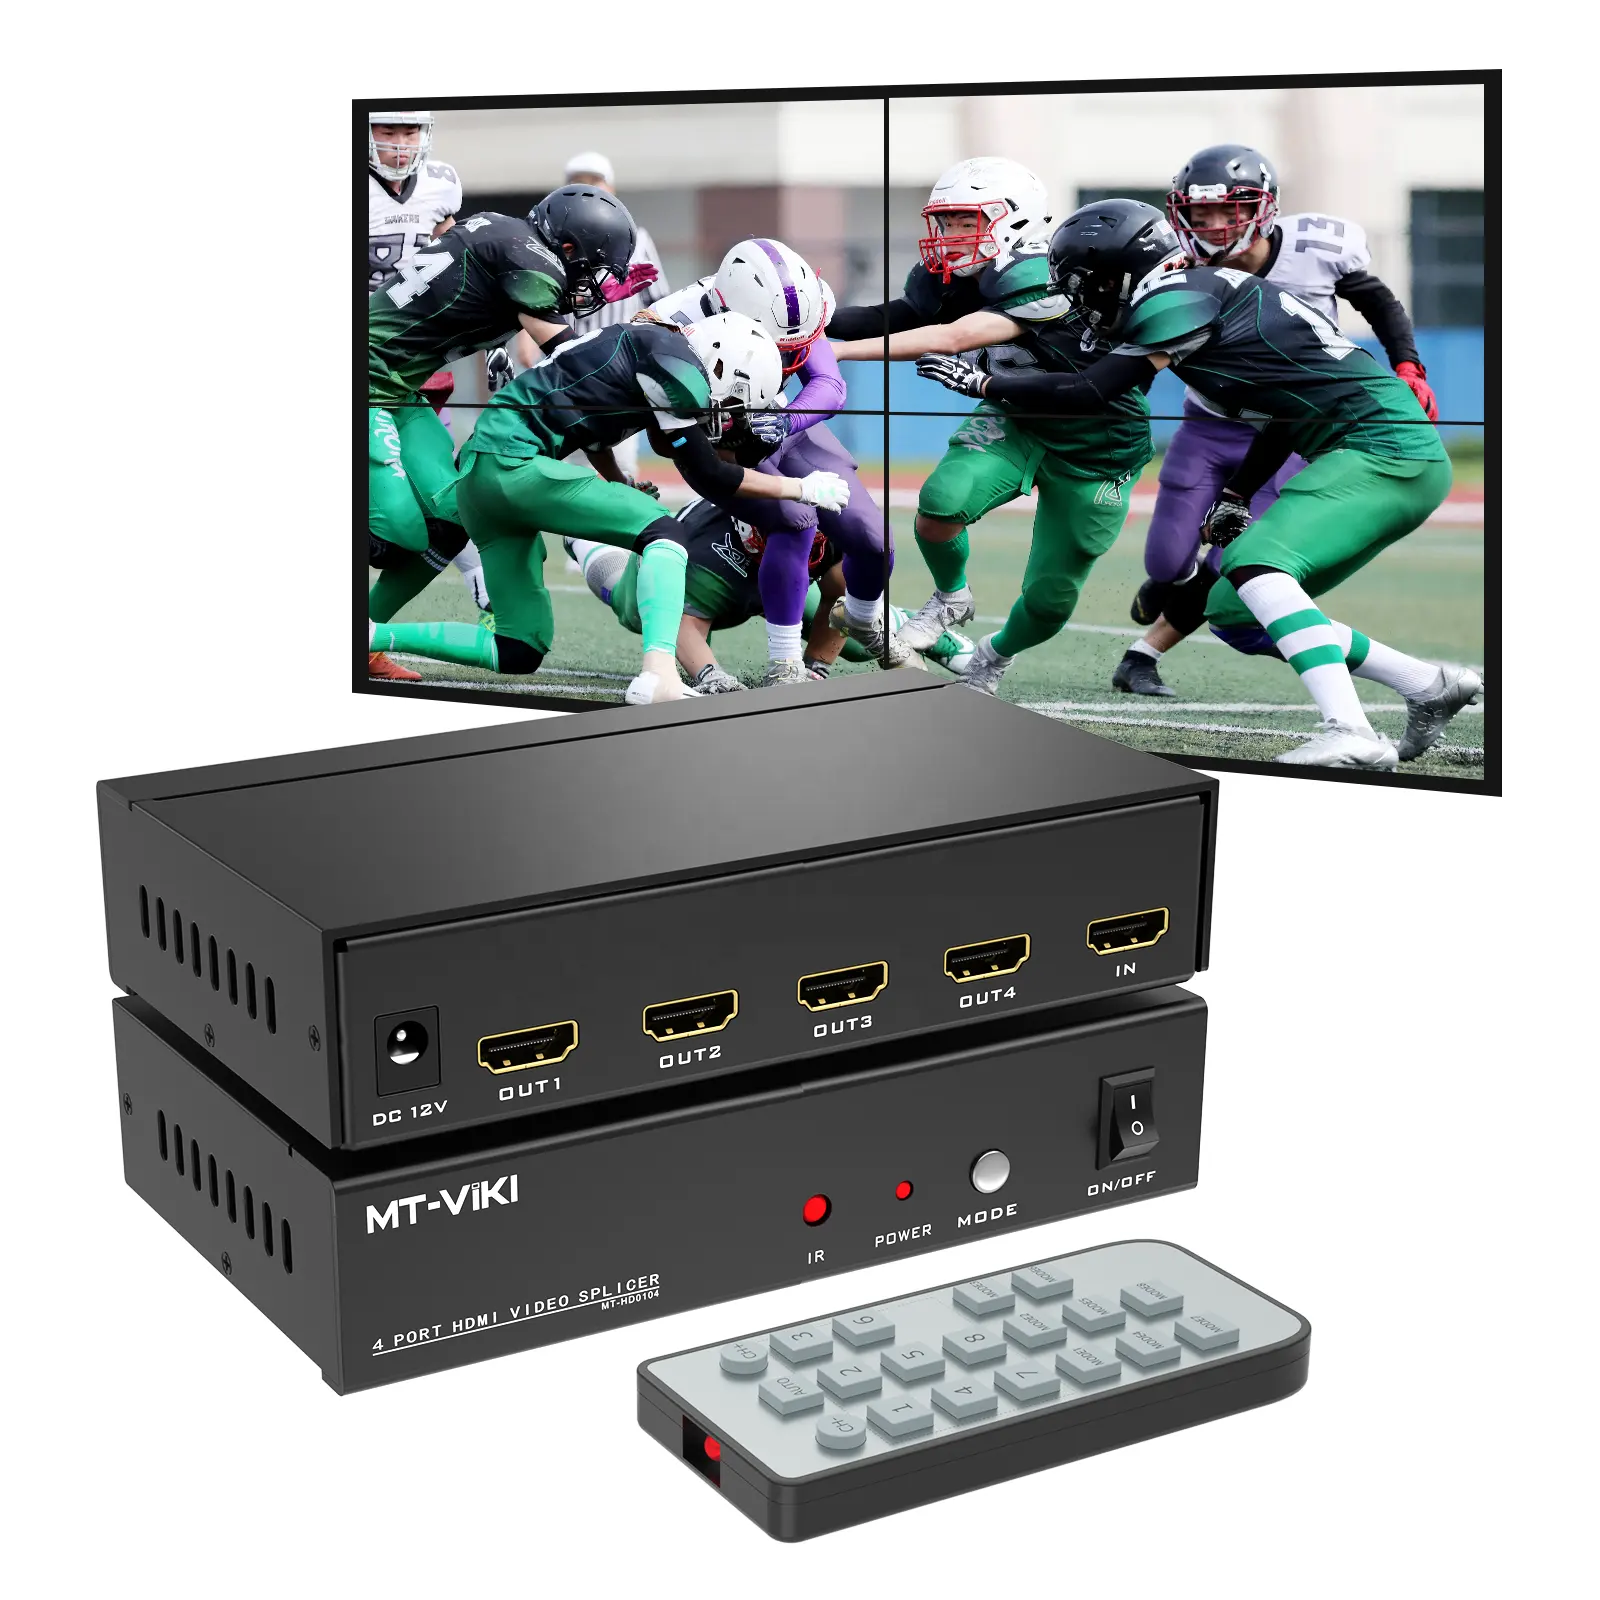 Controller per Video Wall HDMI 2x2 4K 30Hz, MT-VIKI Multiviewer a 4 porte HDMI video wall splicer 1 in 4 out controller per Video wall